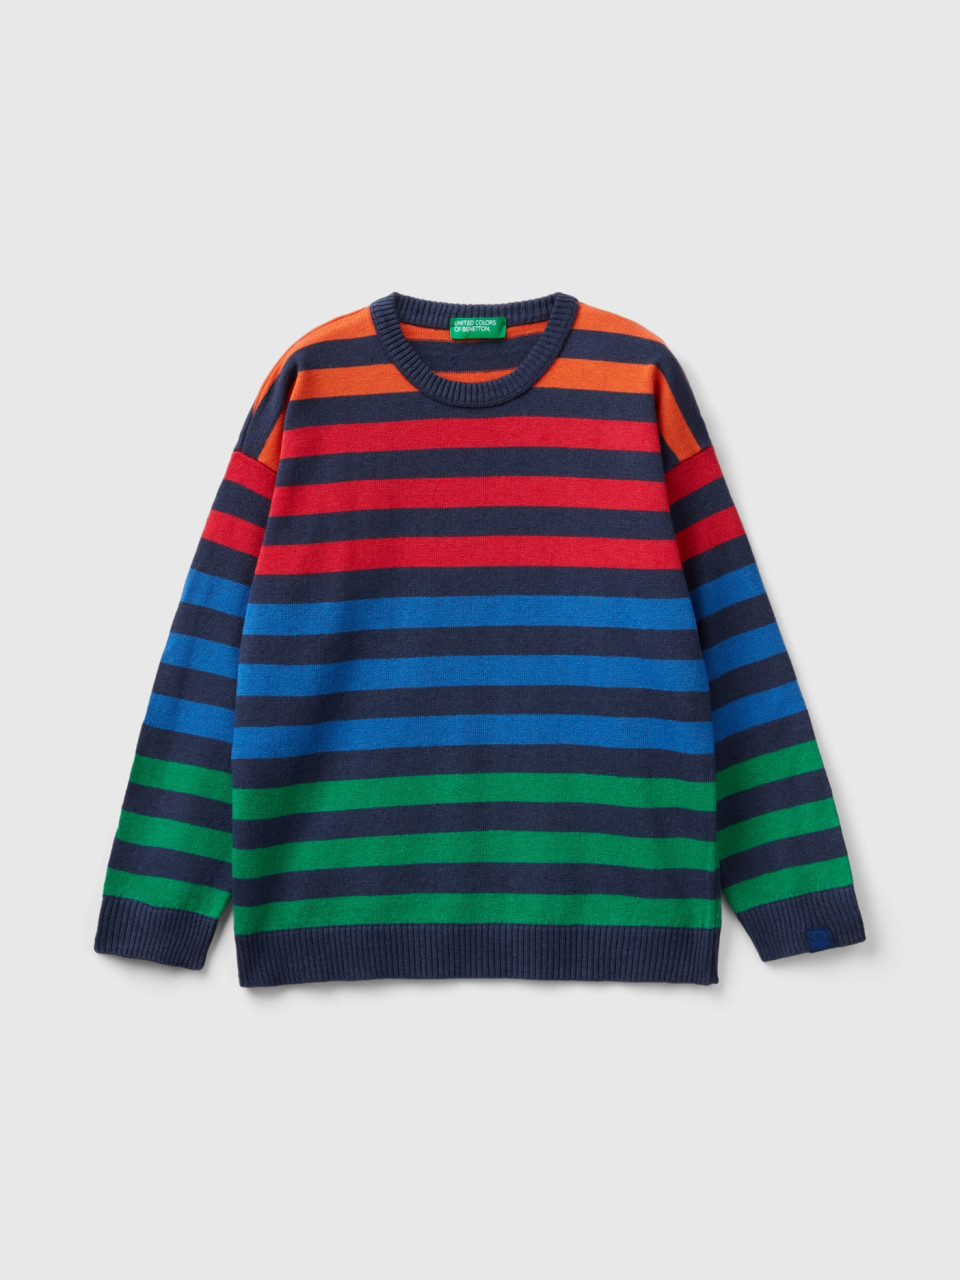 Benetton, Striped Sweater, Multi-color, Kids